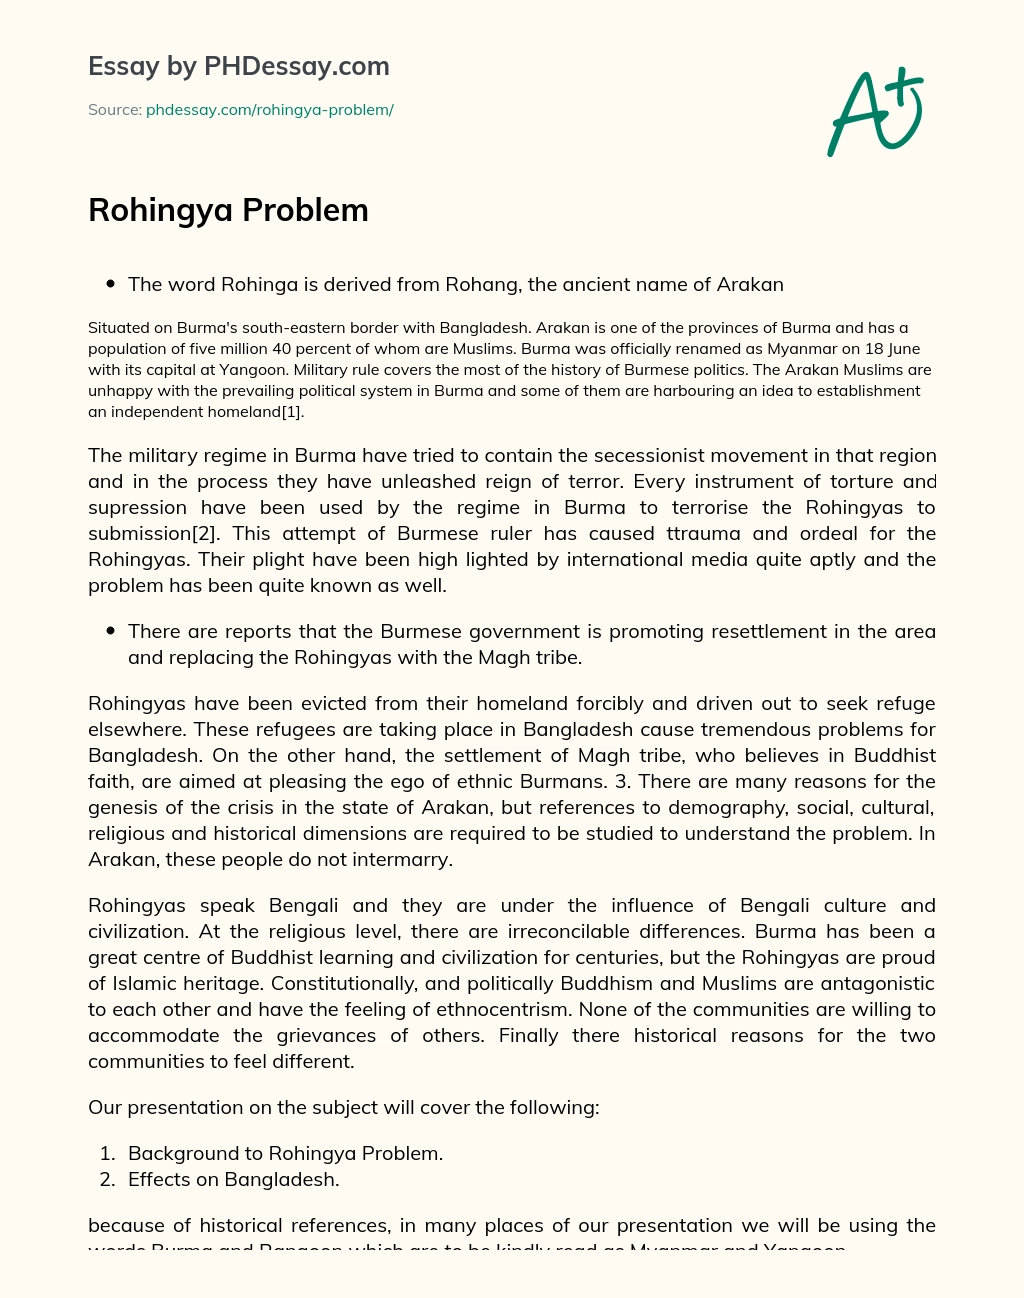 Rohingya Problem essay